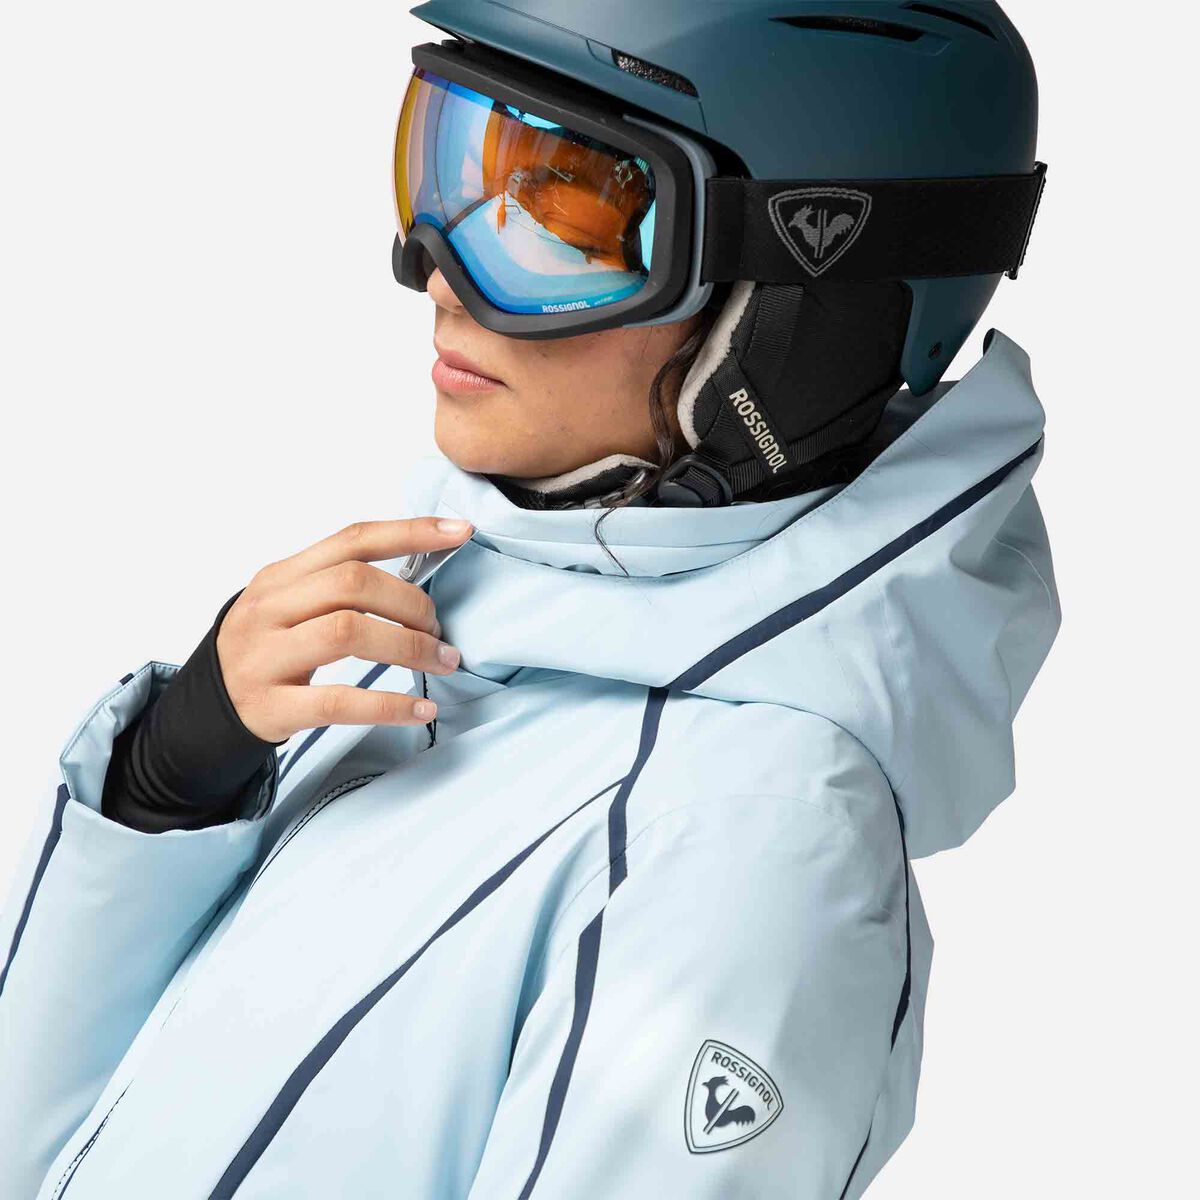 Rossignol Veste de ski Flat femme blue